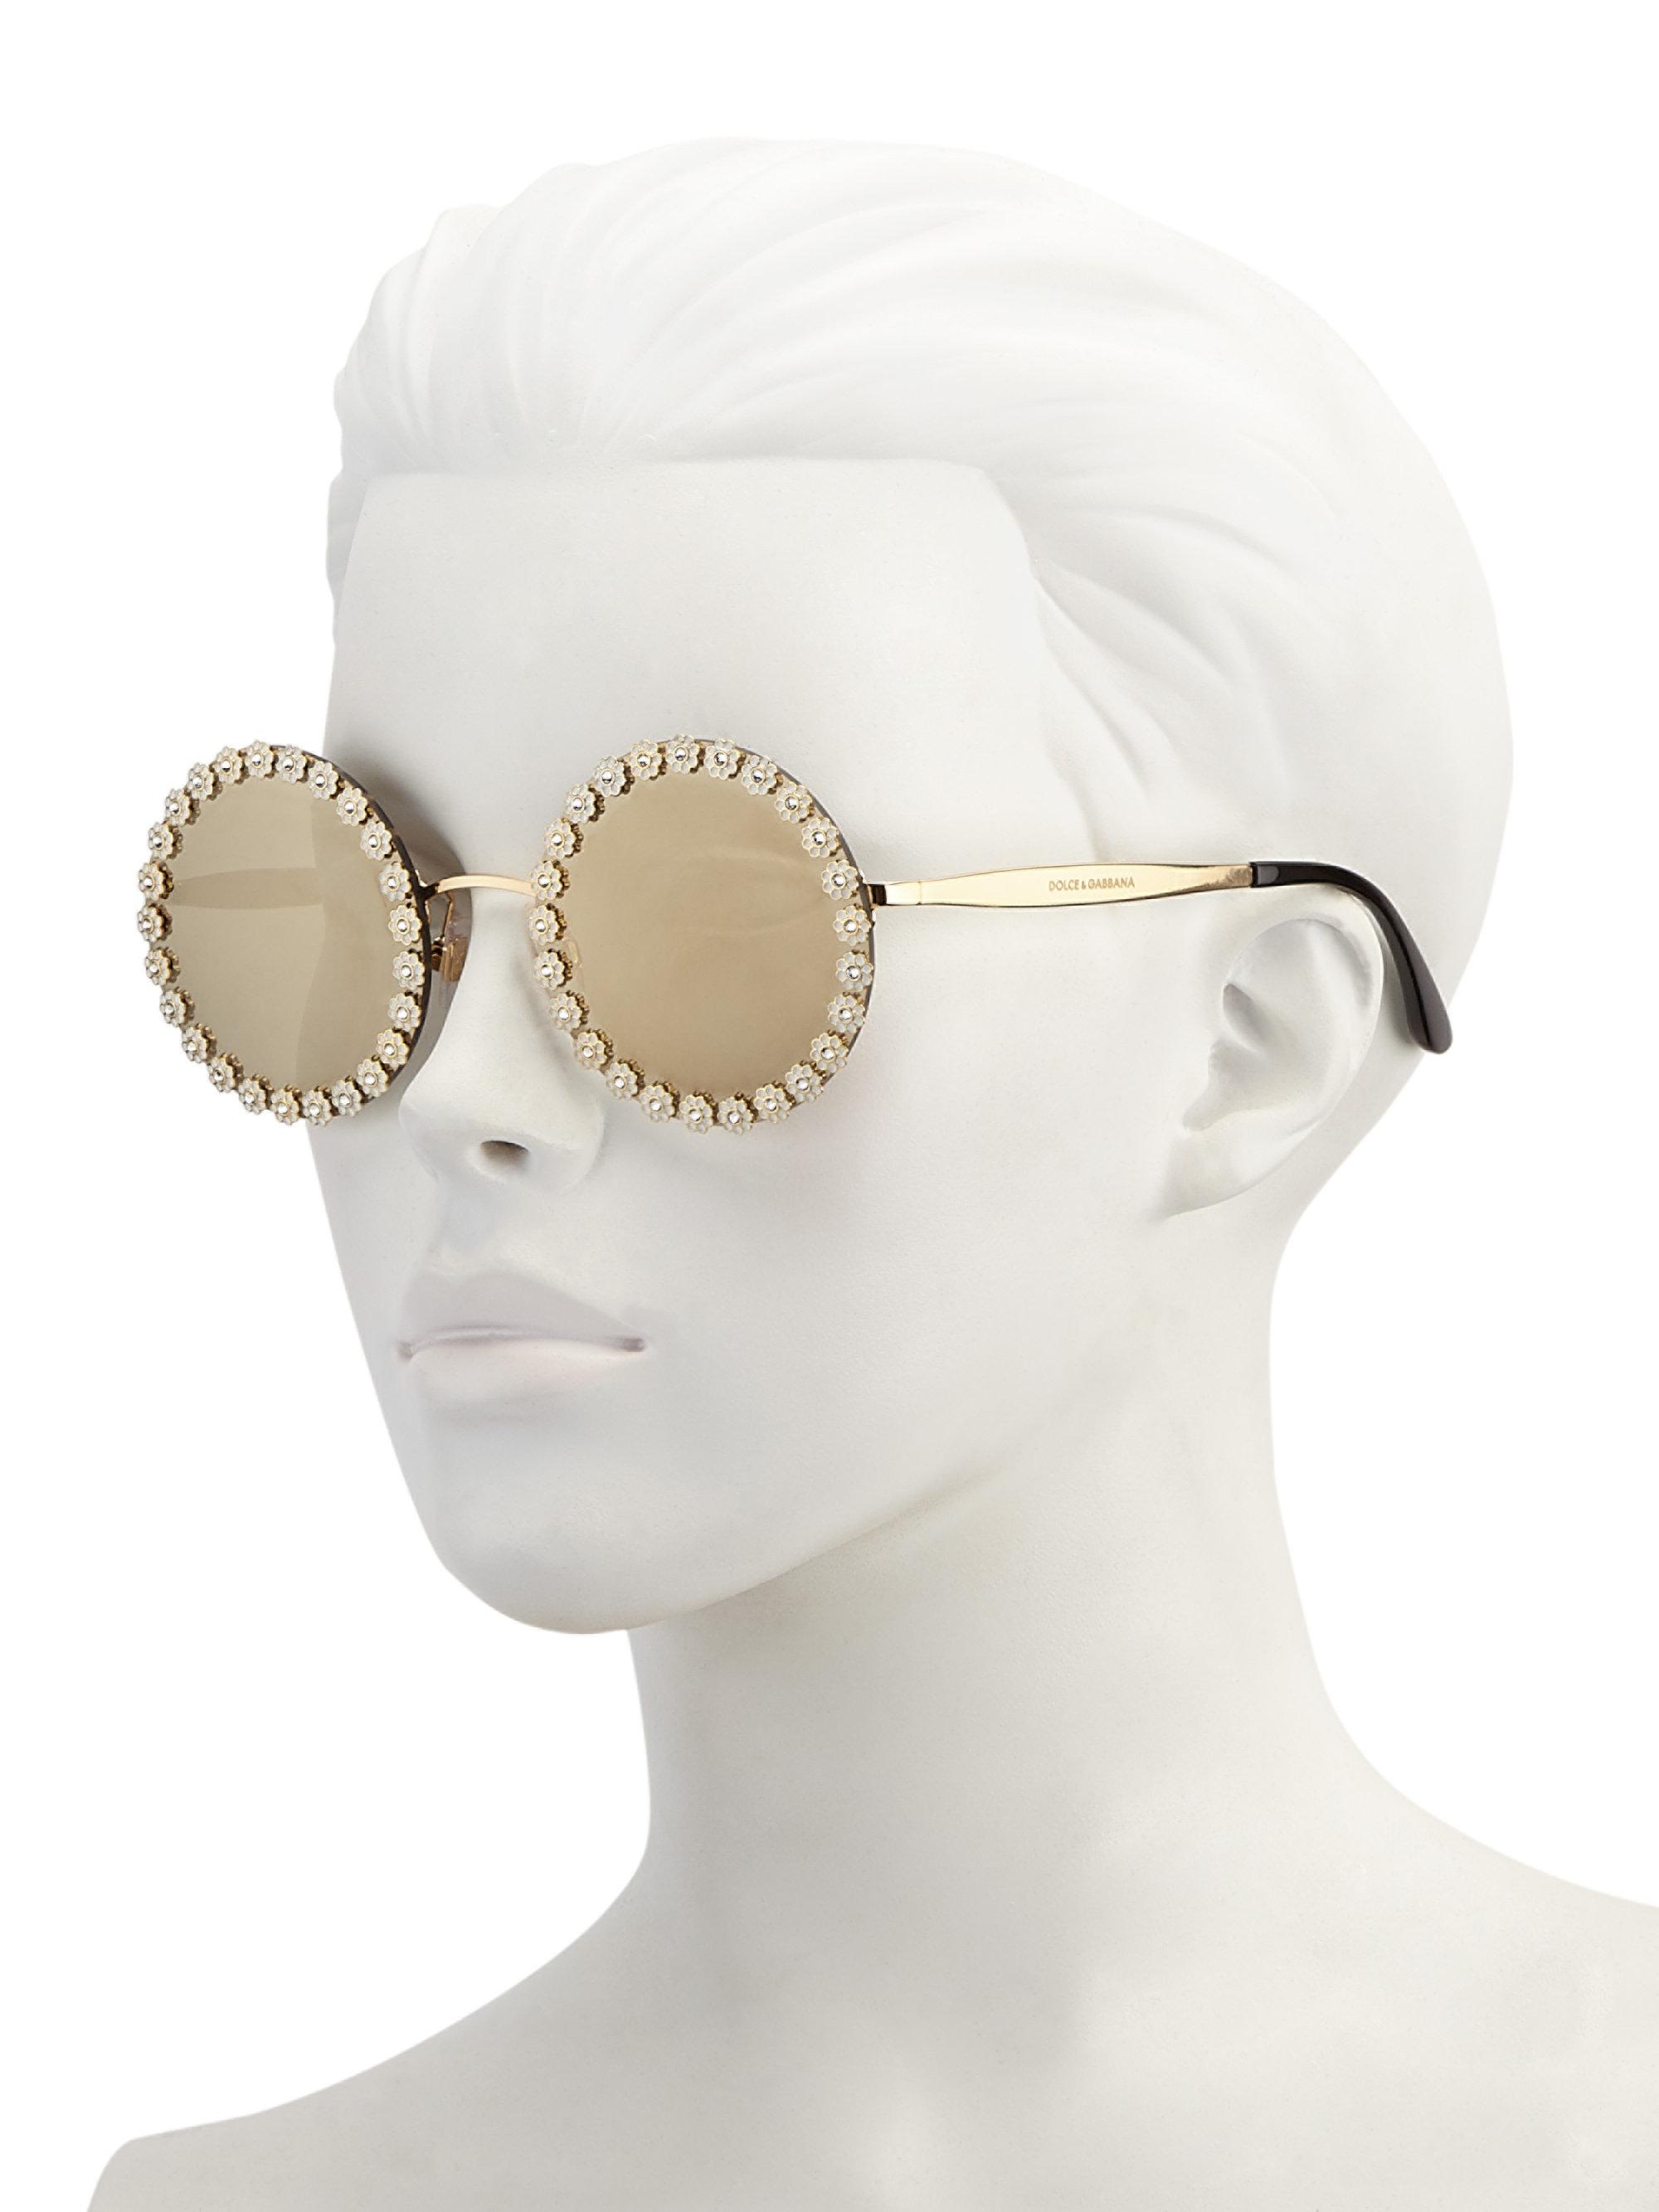 Arriba 80+ imagen dolce gabbana mirrored sunglasses